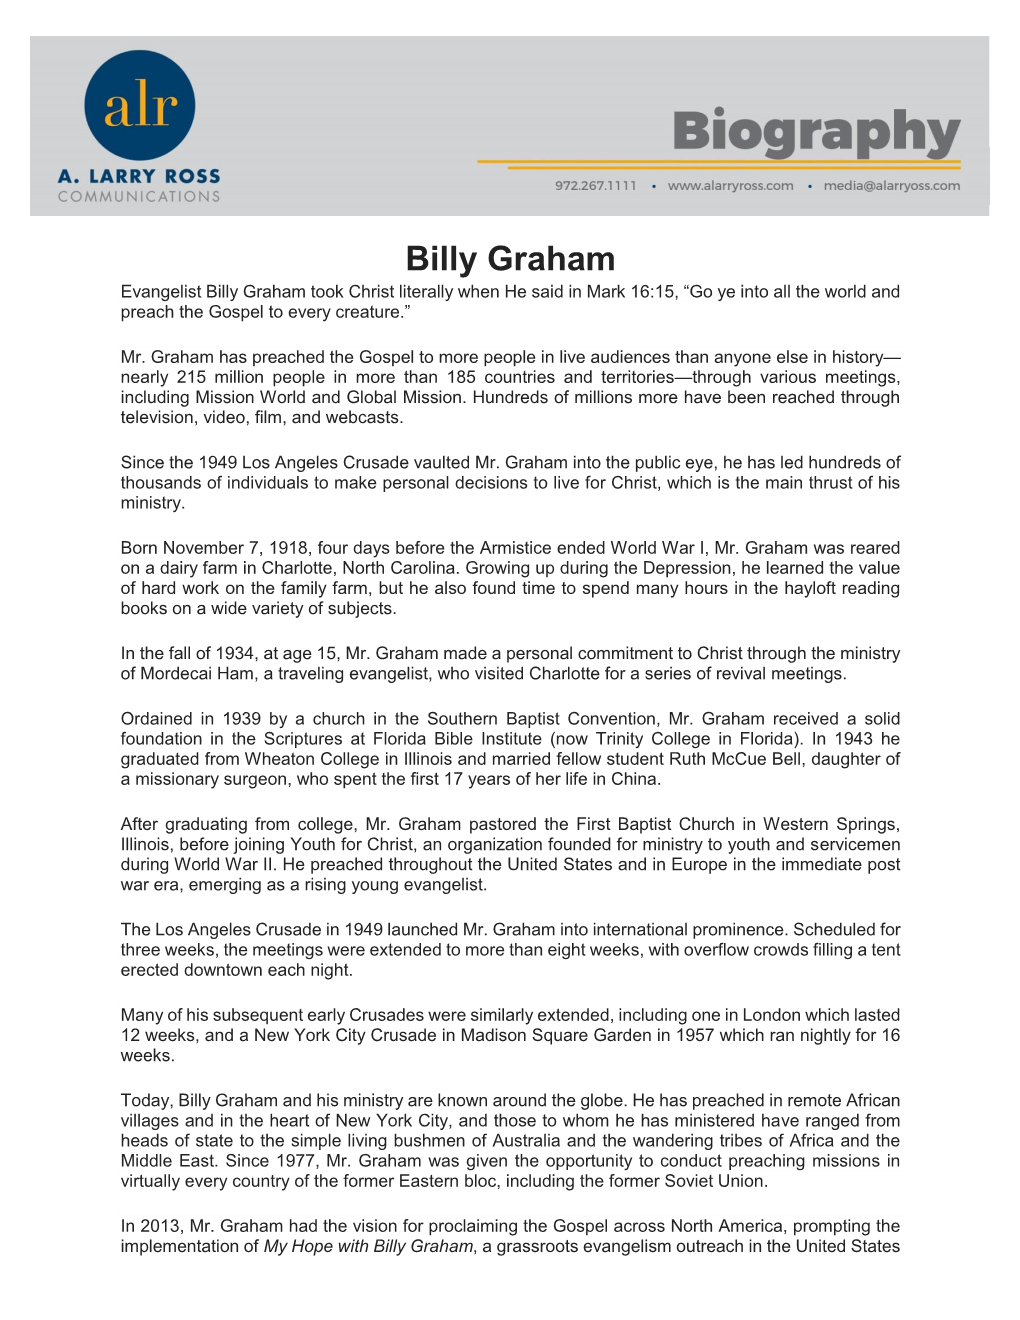 Billy Graham Biography